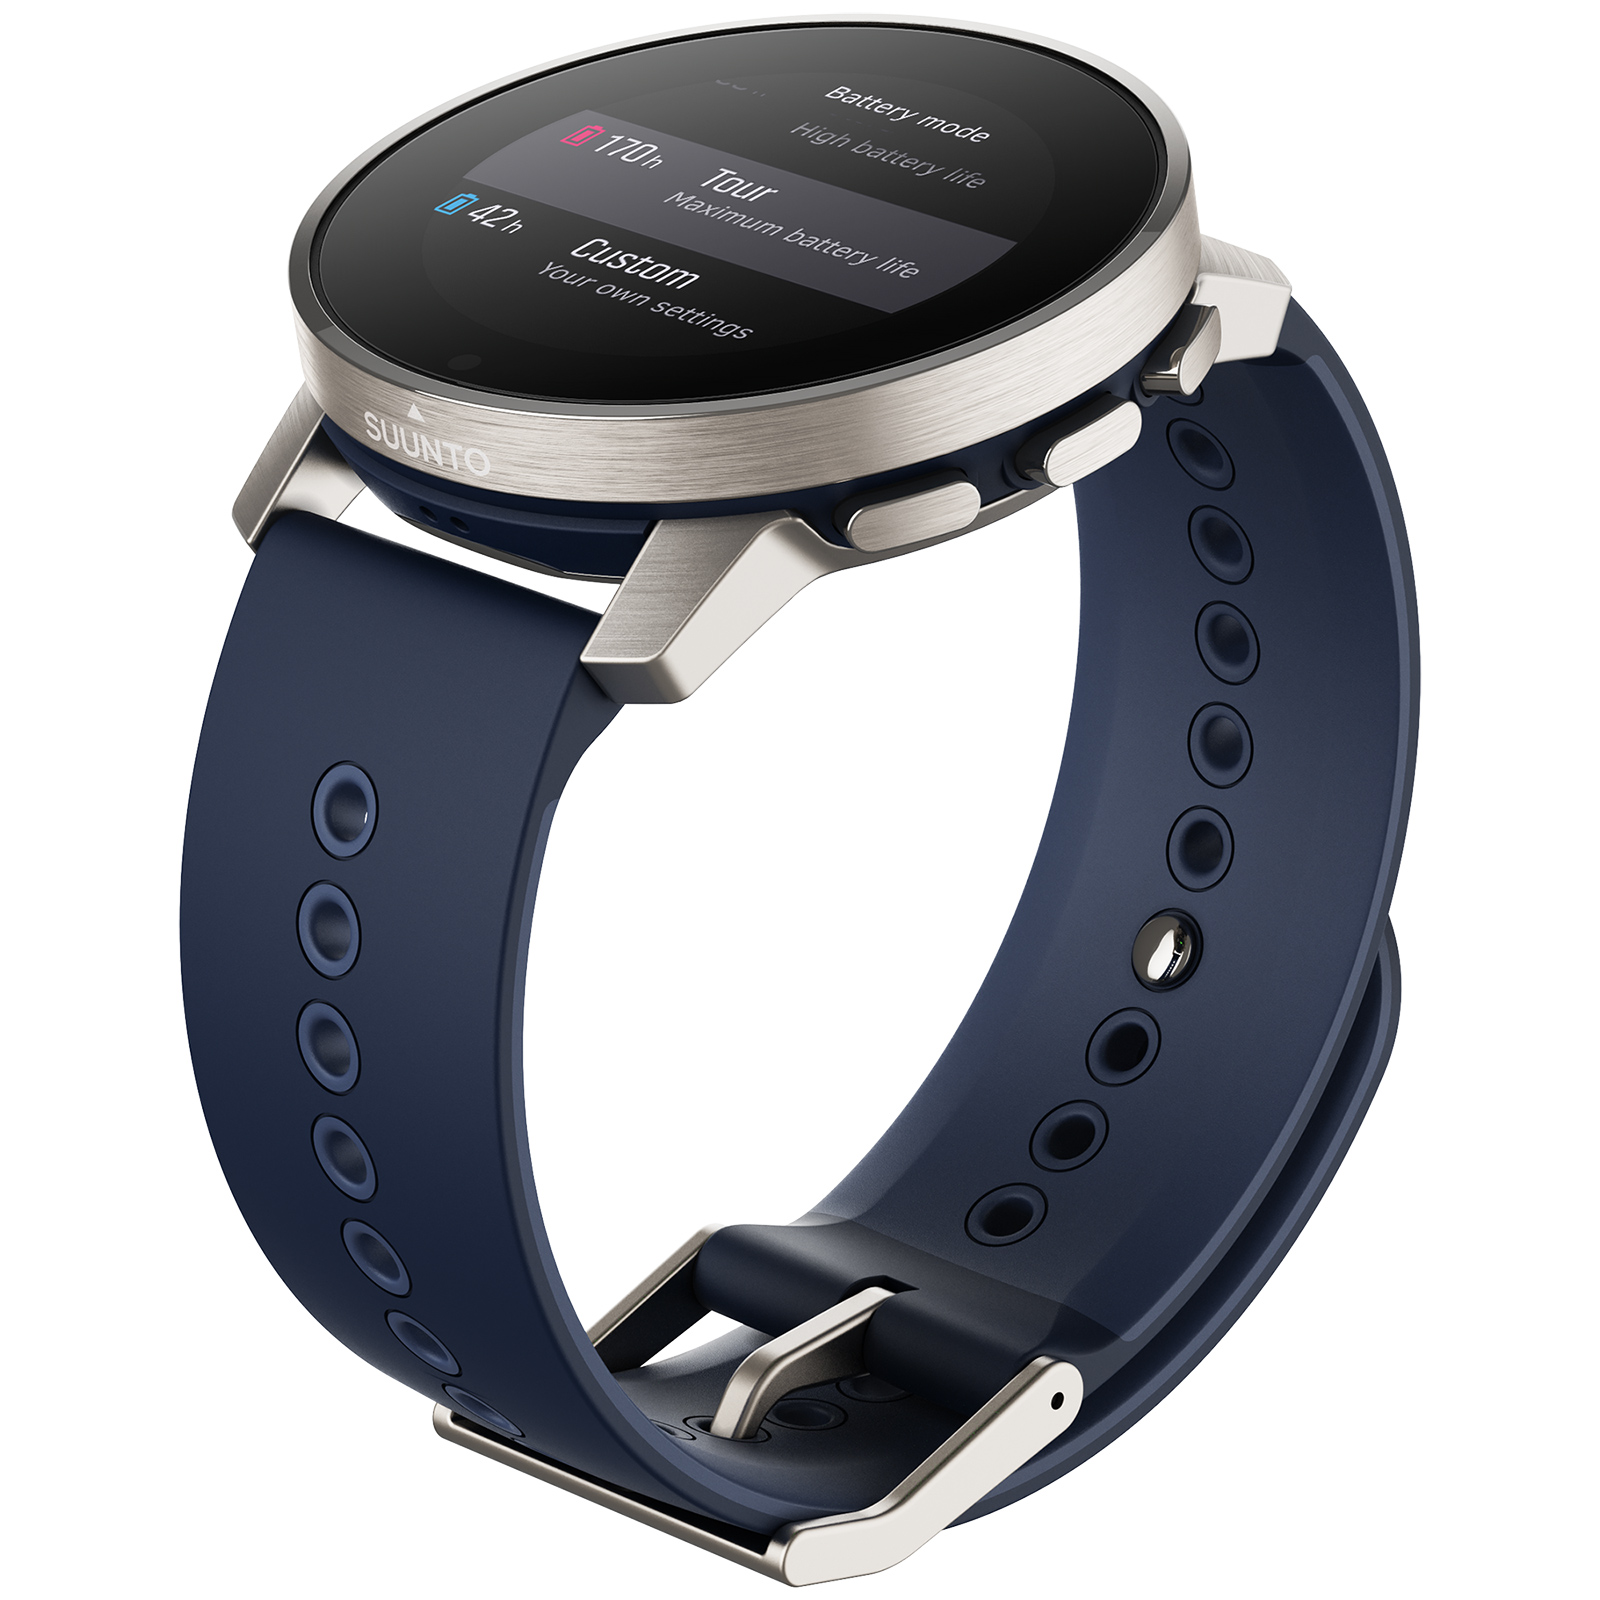 , Suunto 9 Peak: Το λεπτότερο, ισχυρότερο και ανθεκτικότερο smartwatch της εταιρείας